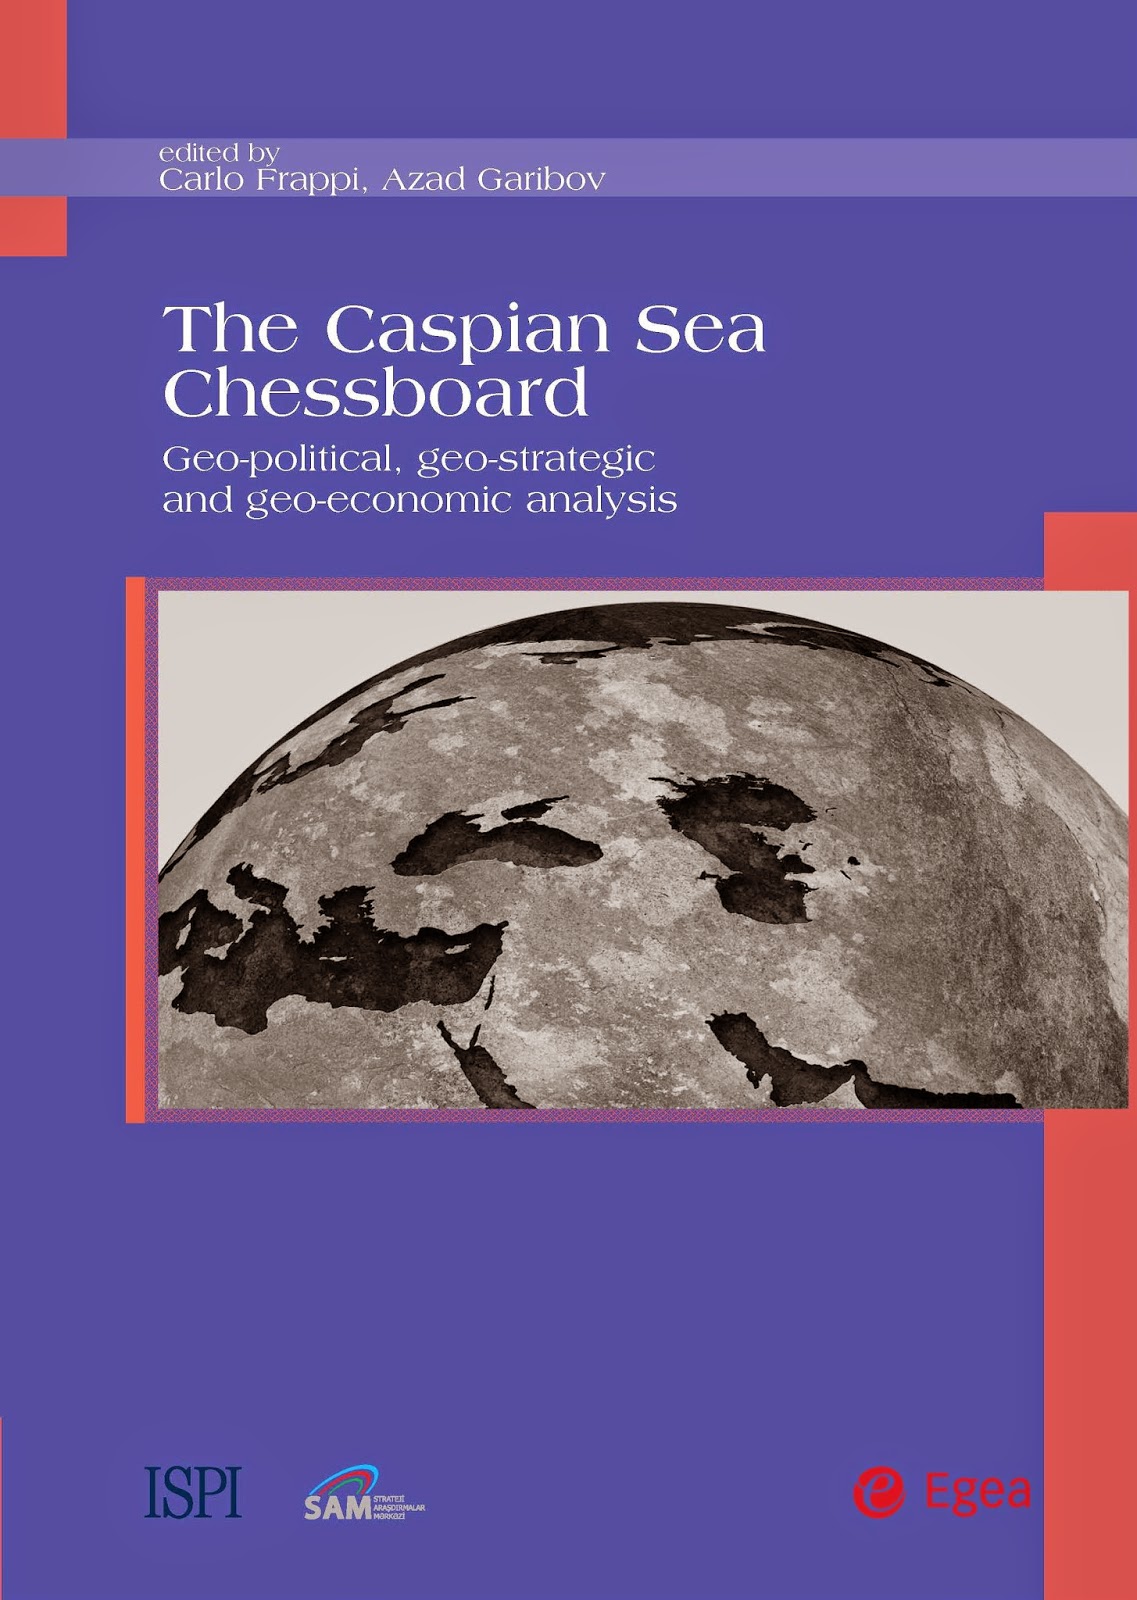 The Caspian Sea Chessboard